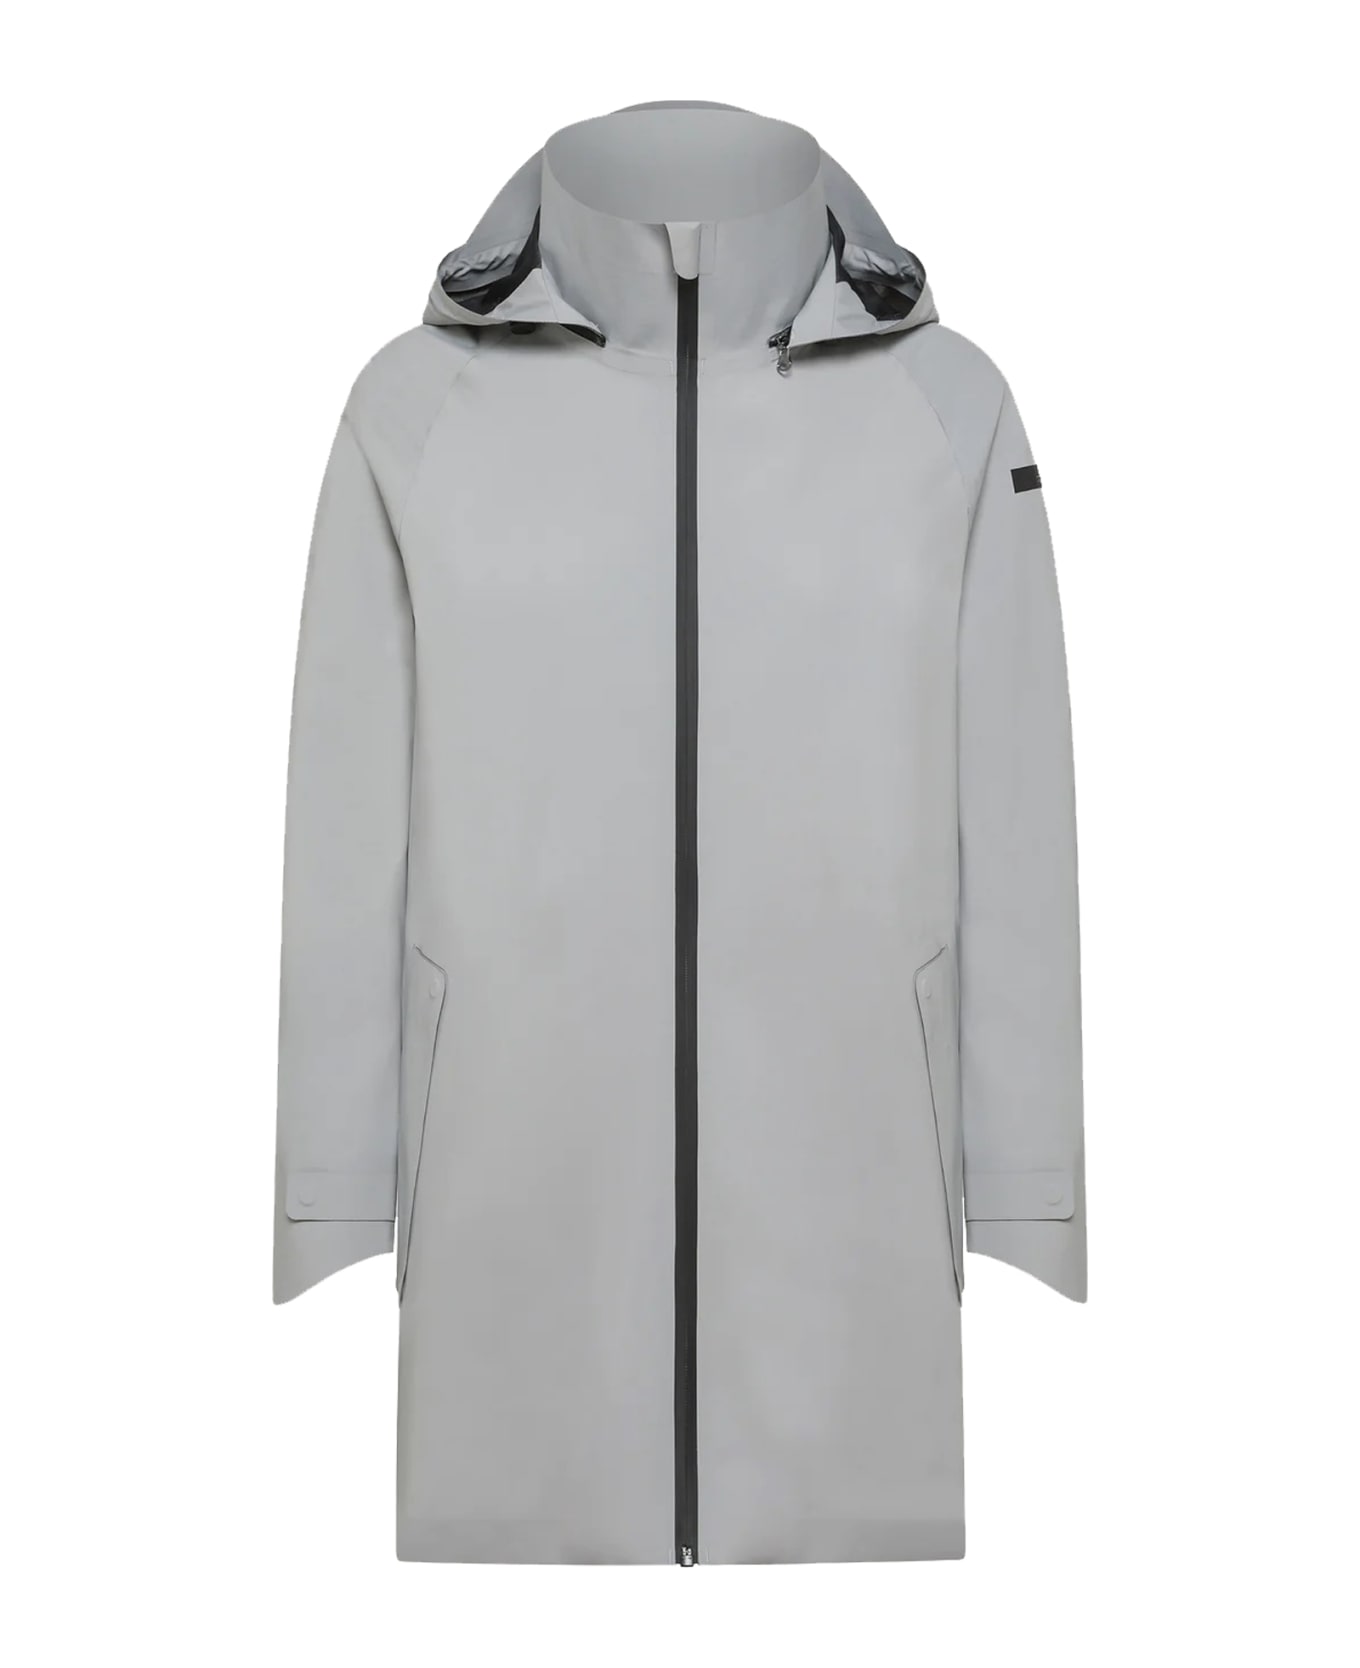 RRD - Roberto Ricci Design Jacket - Grey コート